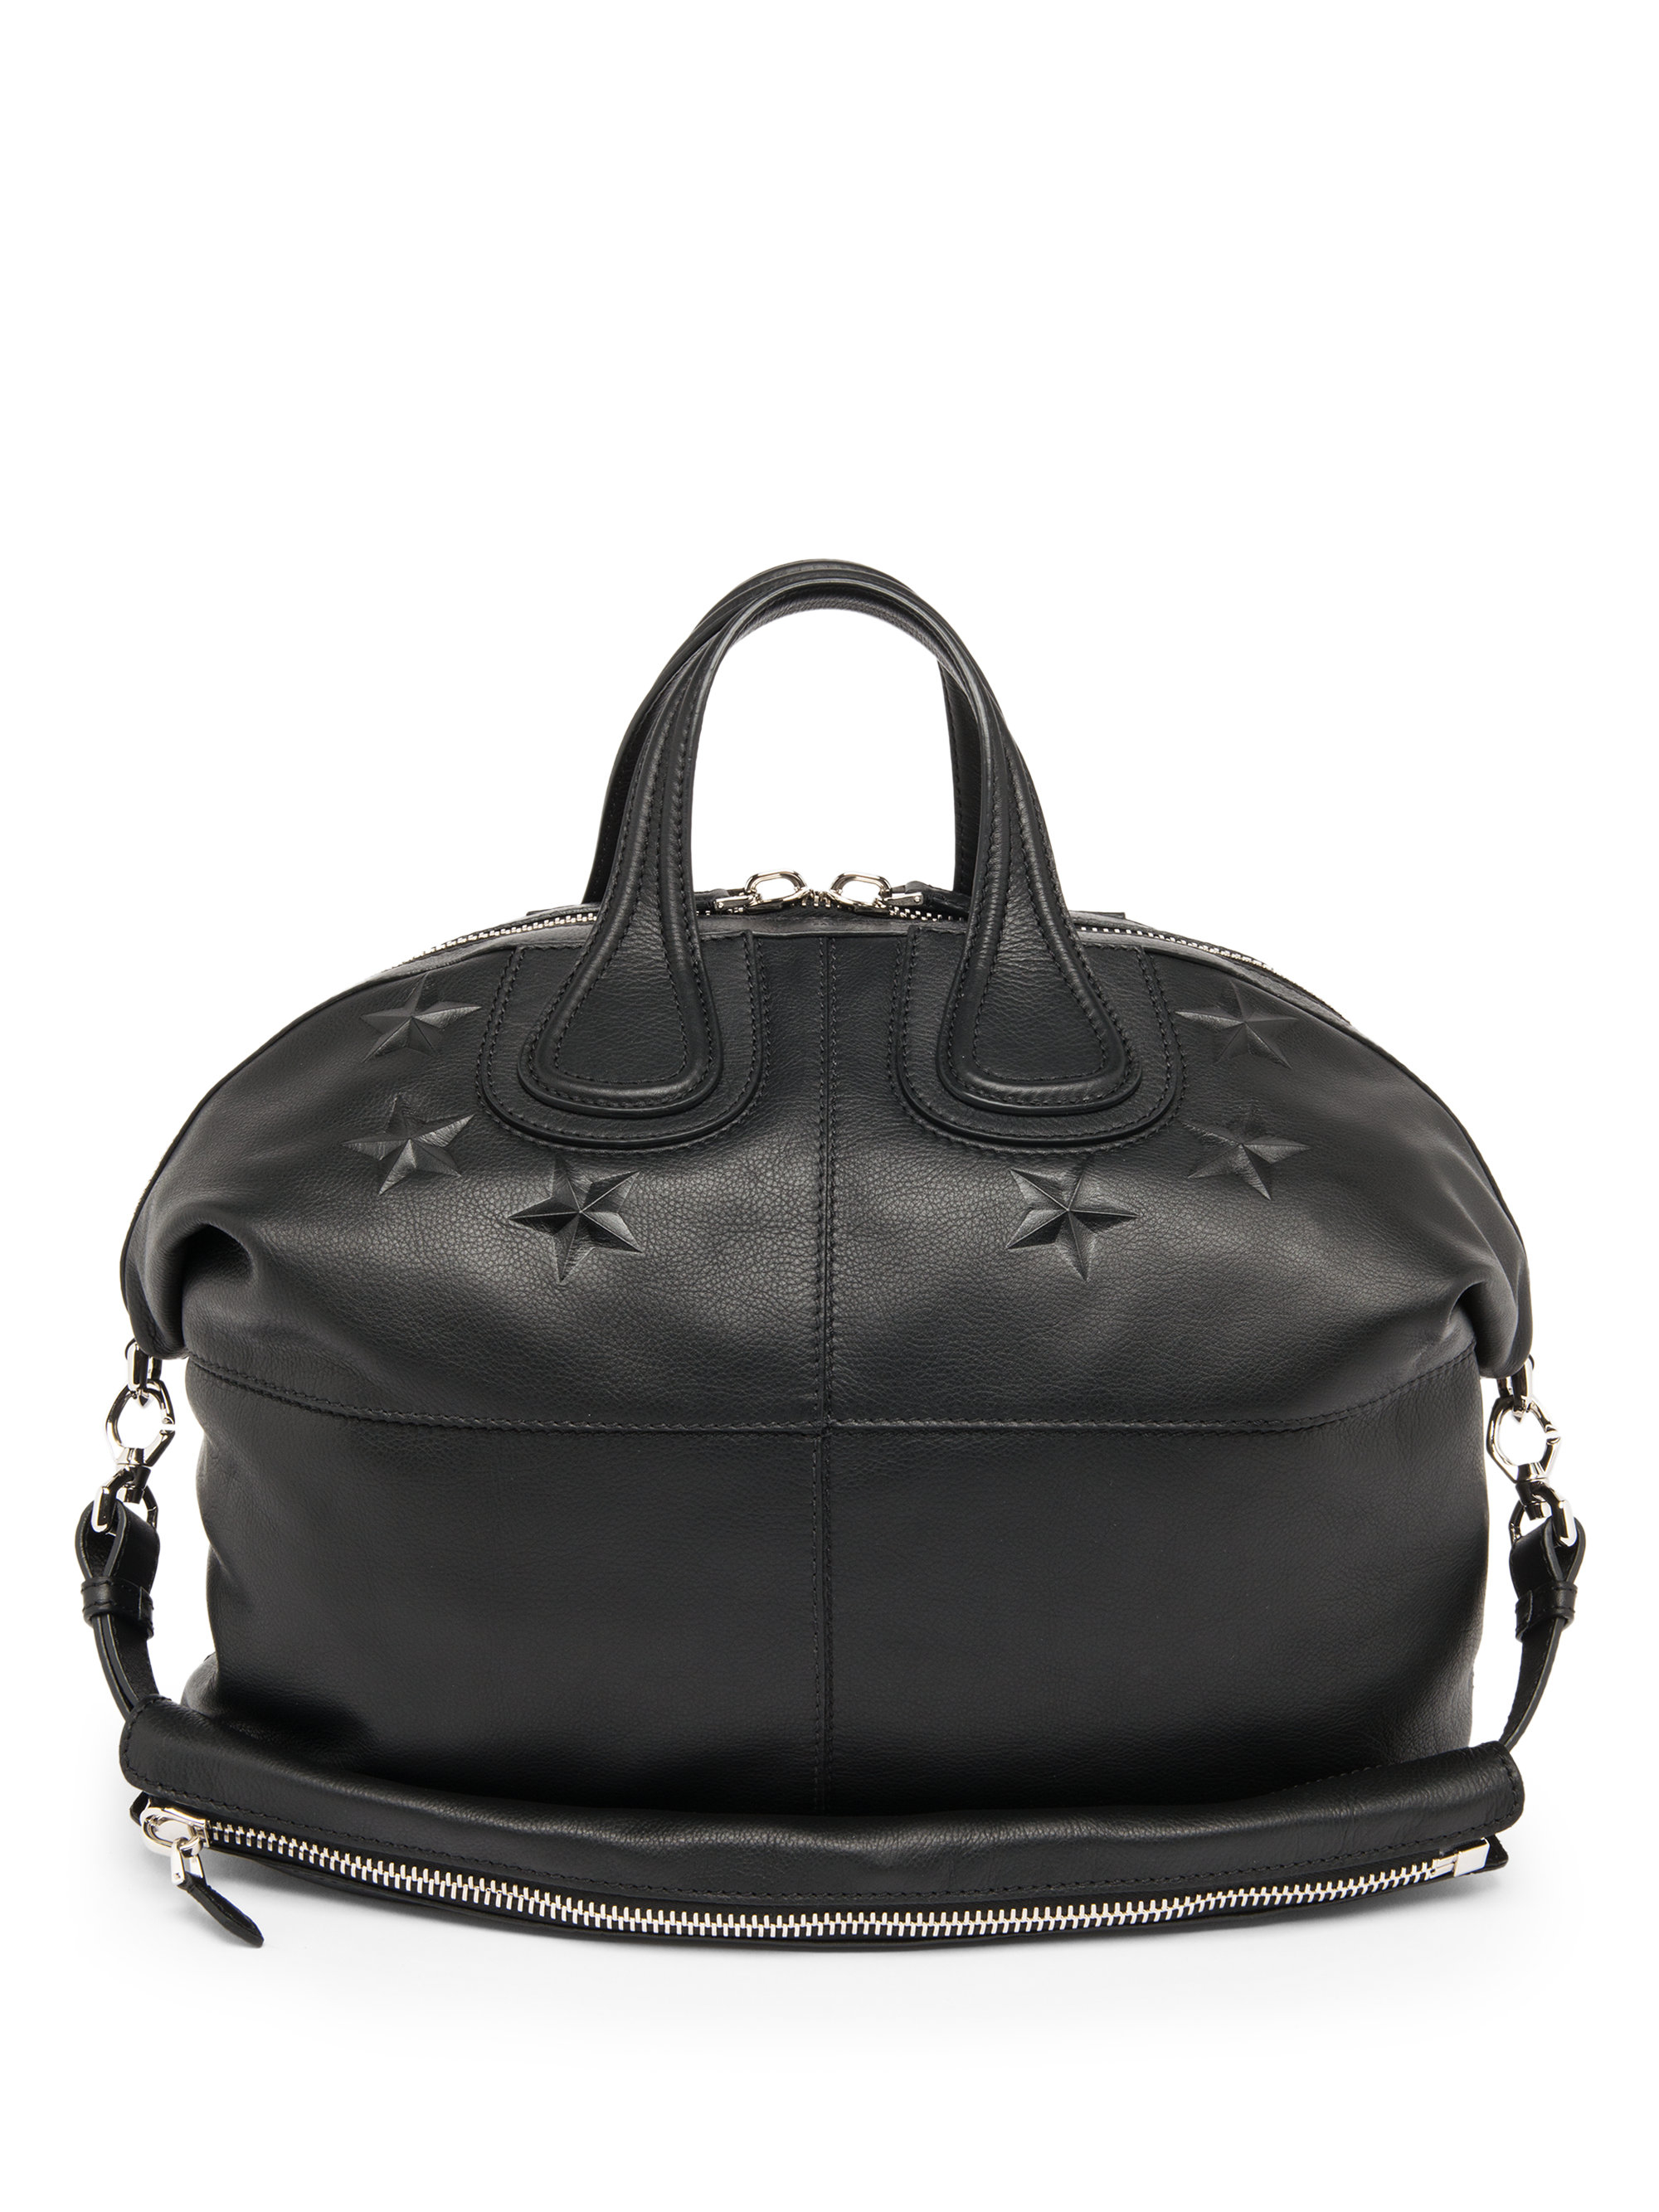 Valentino Handbags Saks Off Fifth | semashow.com